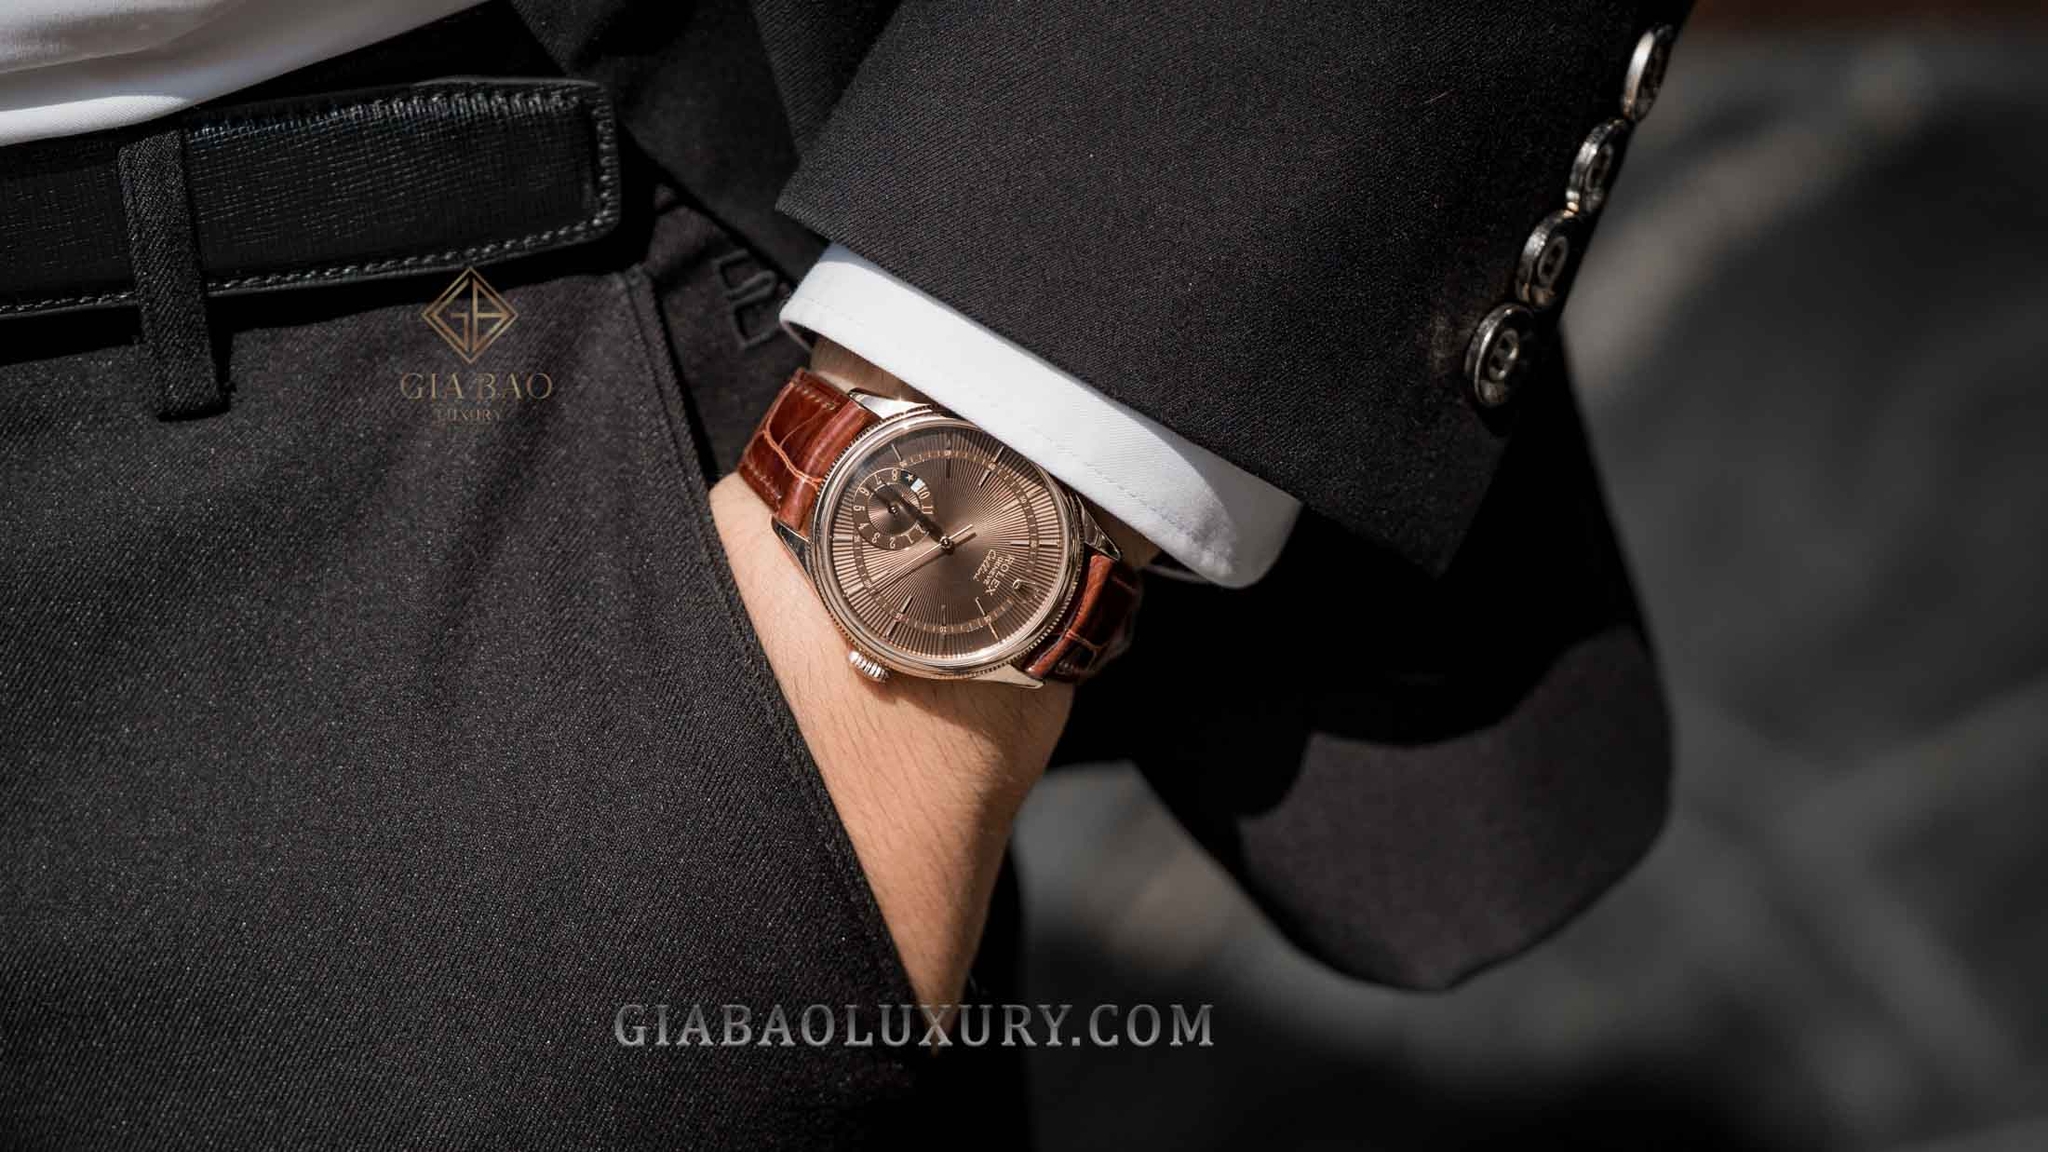 Thanh lịch với vest đen cùng Rolex Cellini Dual Time 50525 Mặt Số Chocolate